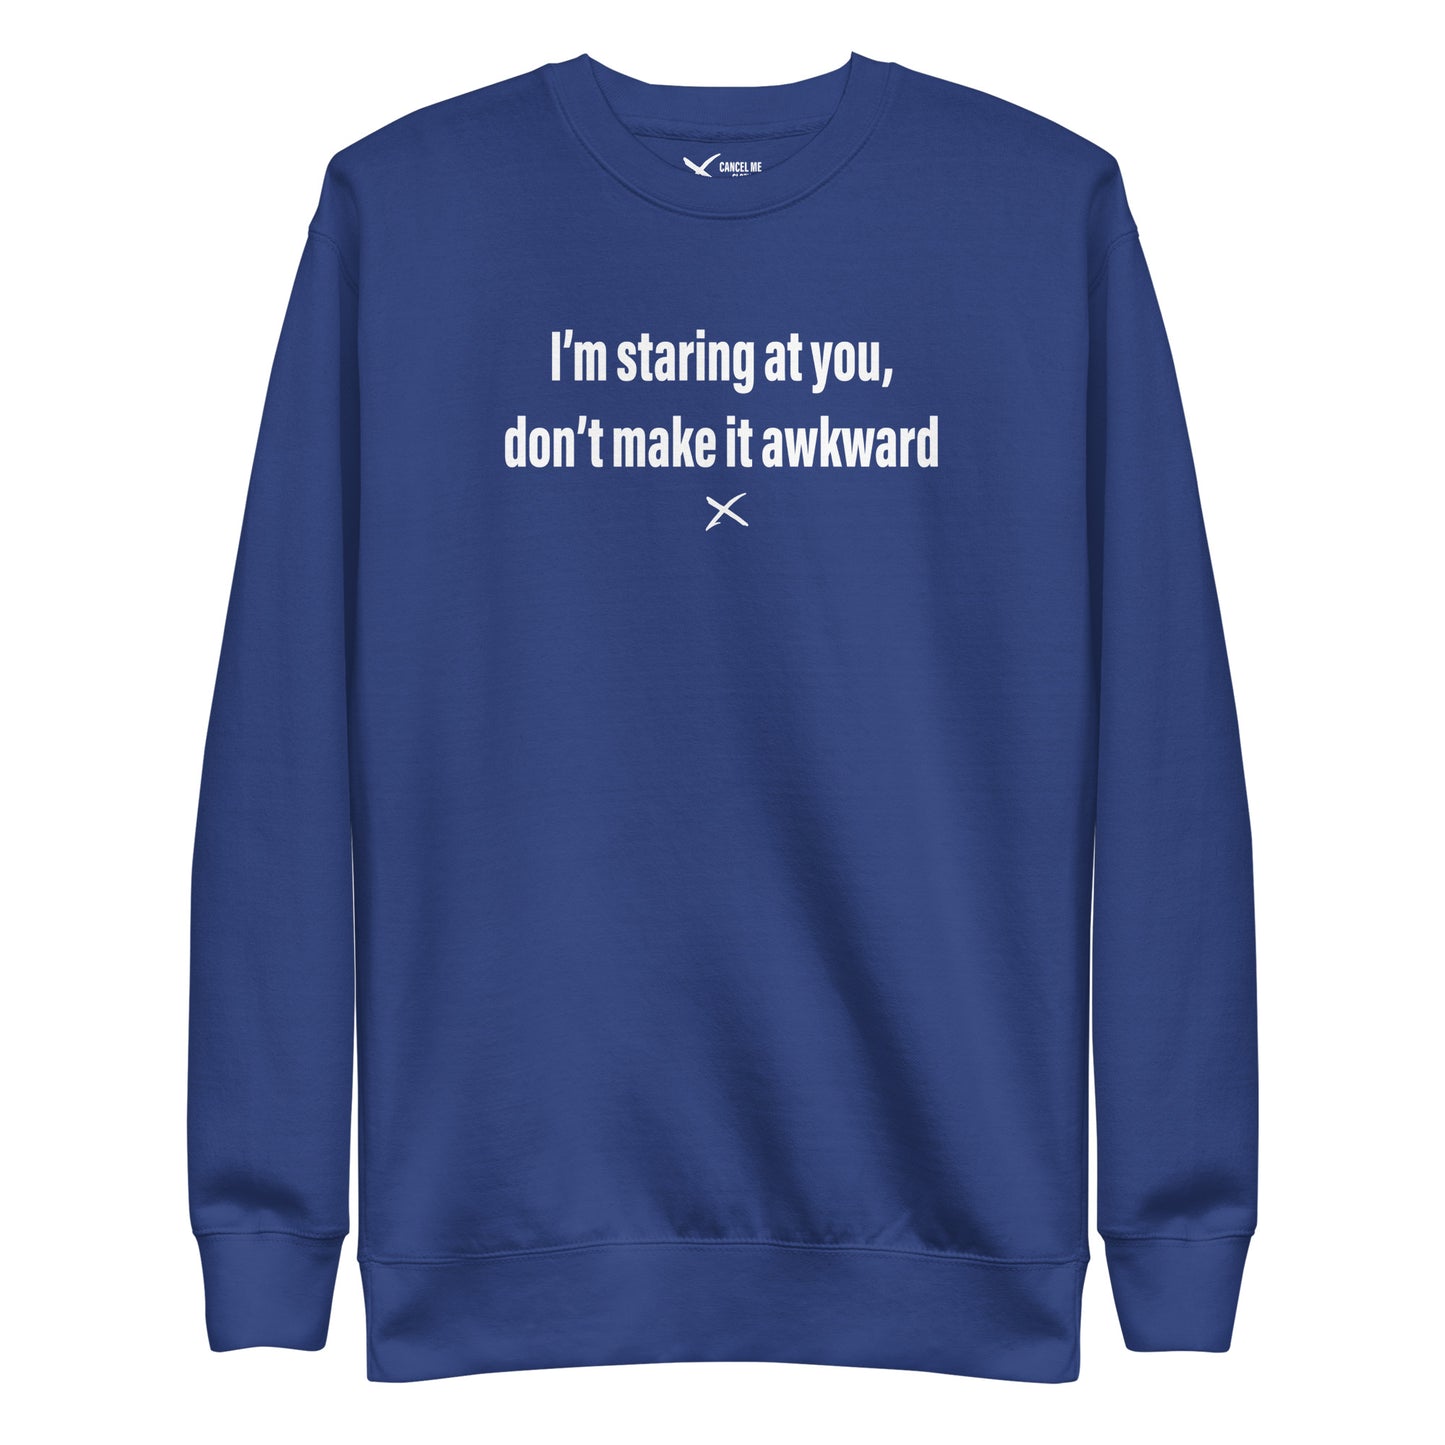 I'm staring at you, don't make it awkward - Sweatshirt